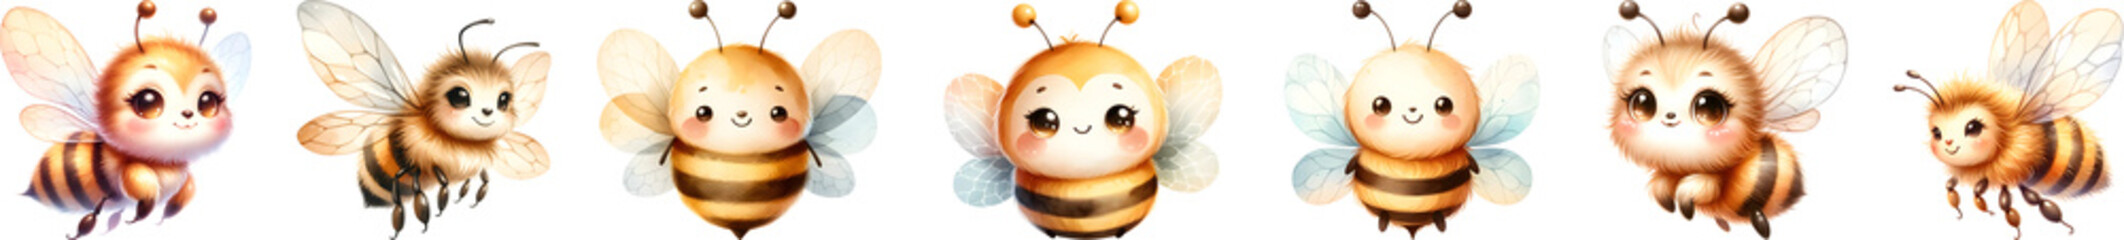 Cute bee cartoon character for kids